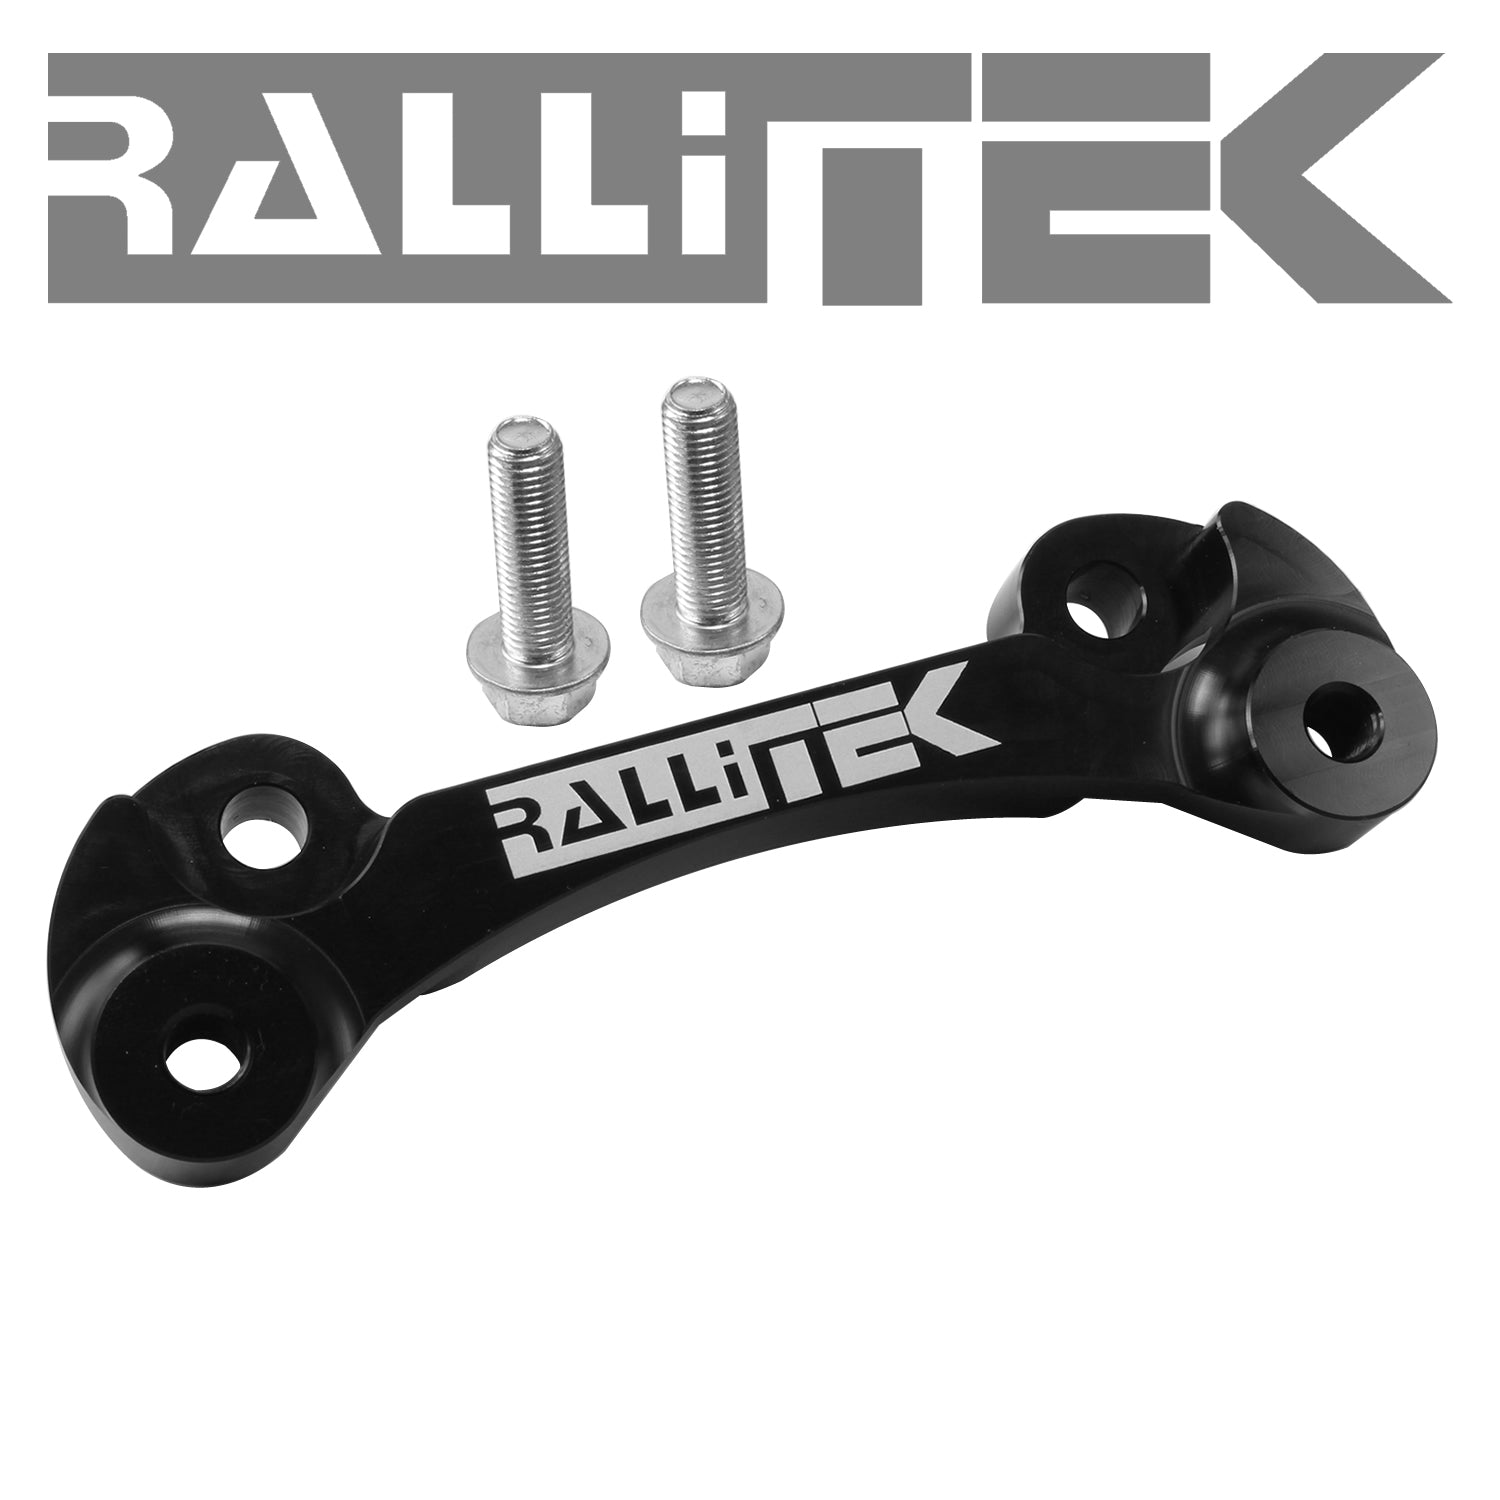 RalliTEK Rear Brembo Adapter Kit - WRX 2002-2005 / 2.5RS 1998-2005 / More